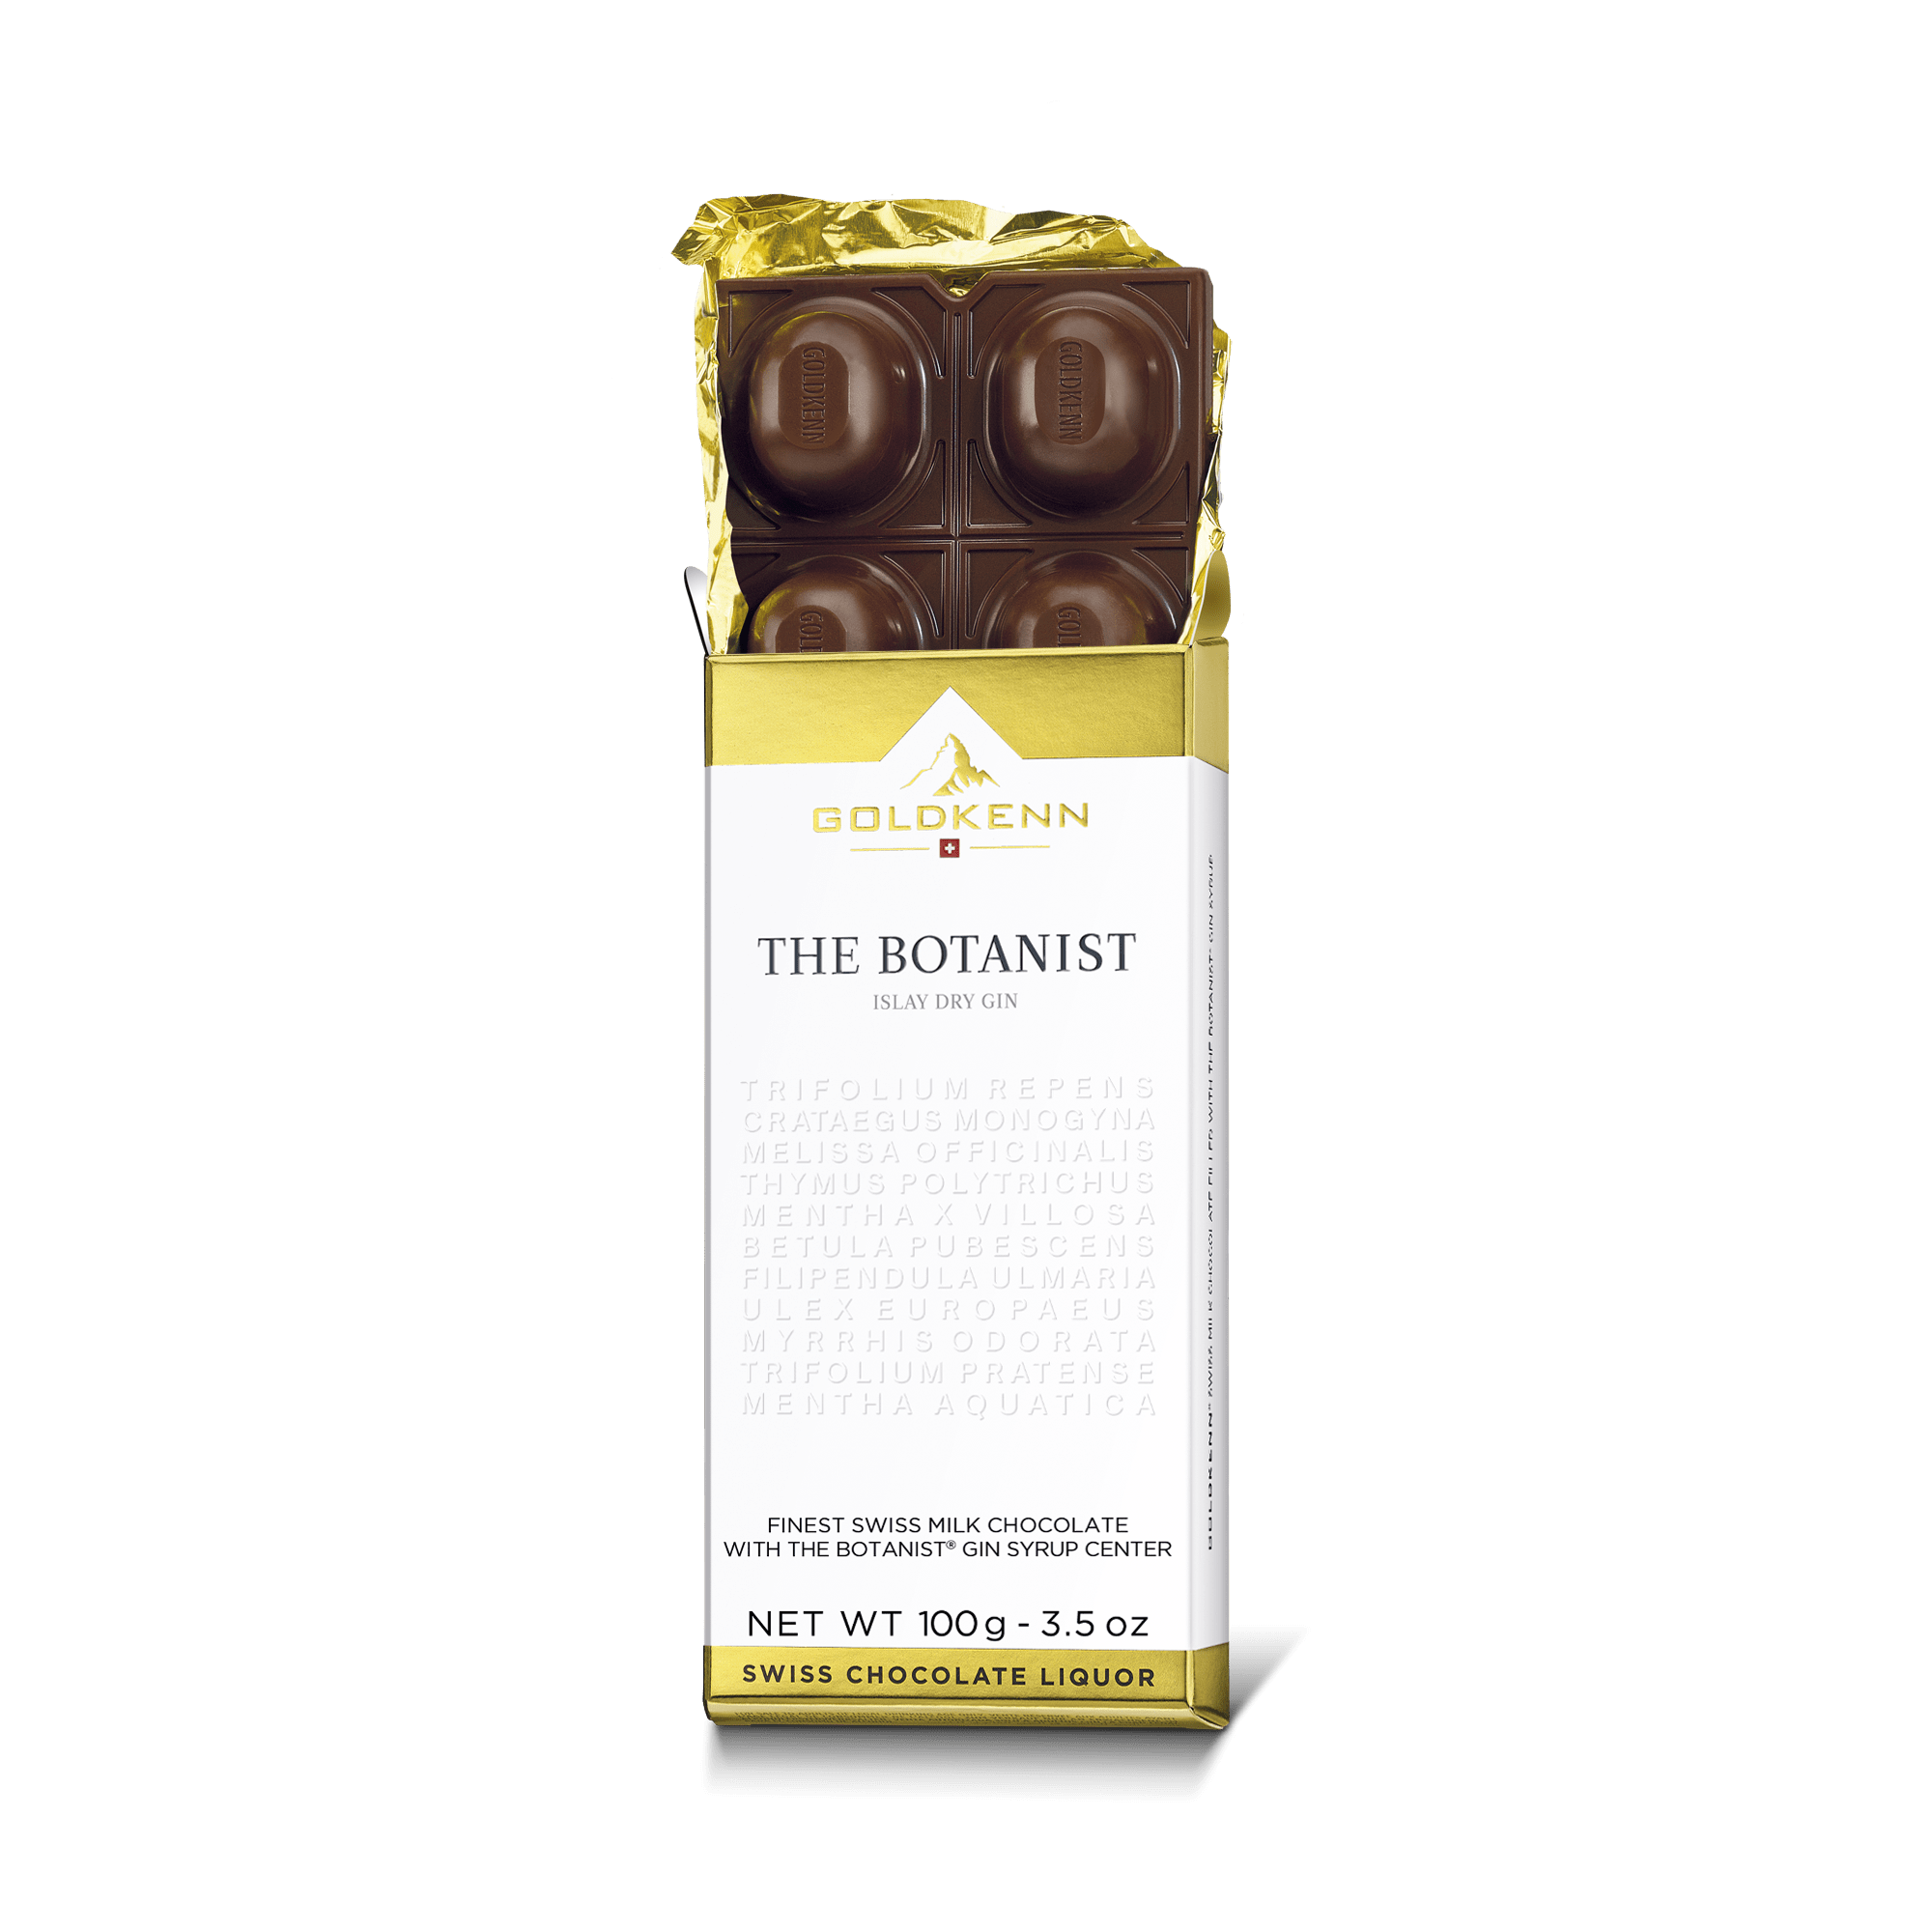 Goldkenn 37% Milk Chocolate Bar with The Botanist Islay Dry Gin Syrup Center Open-min